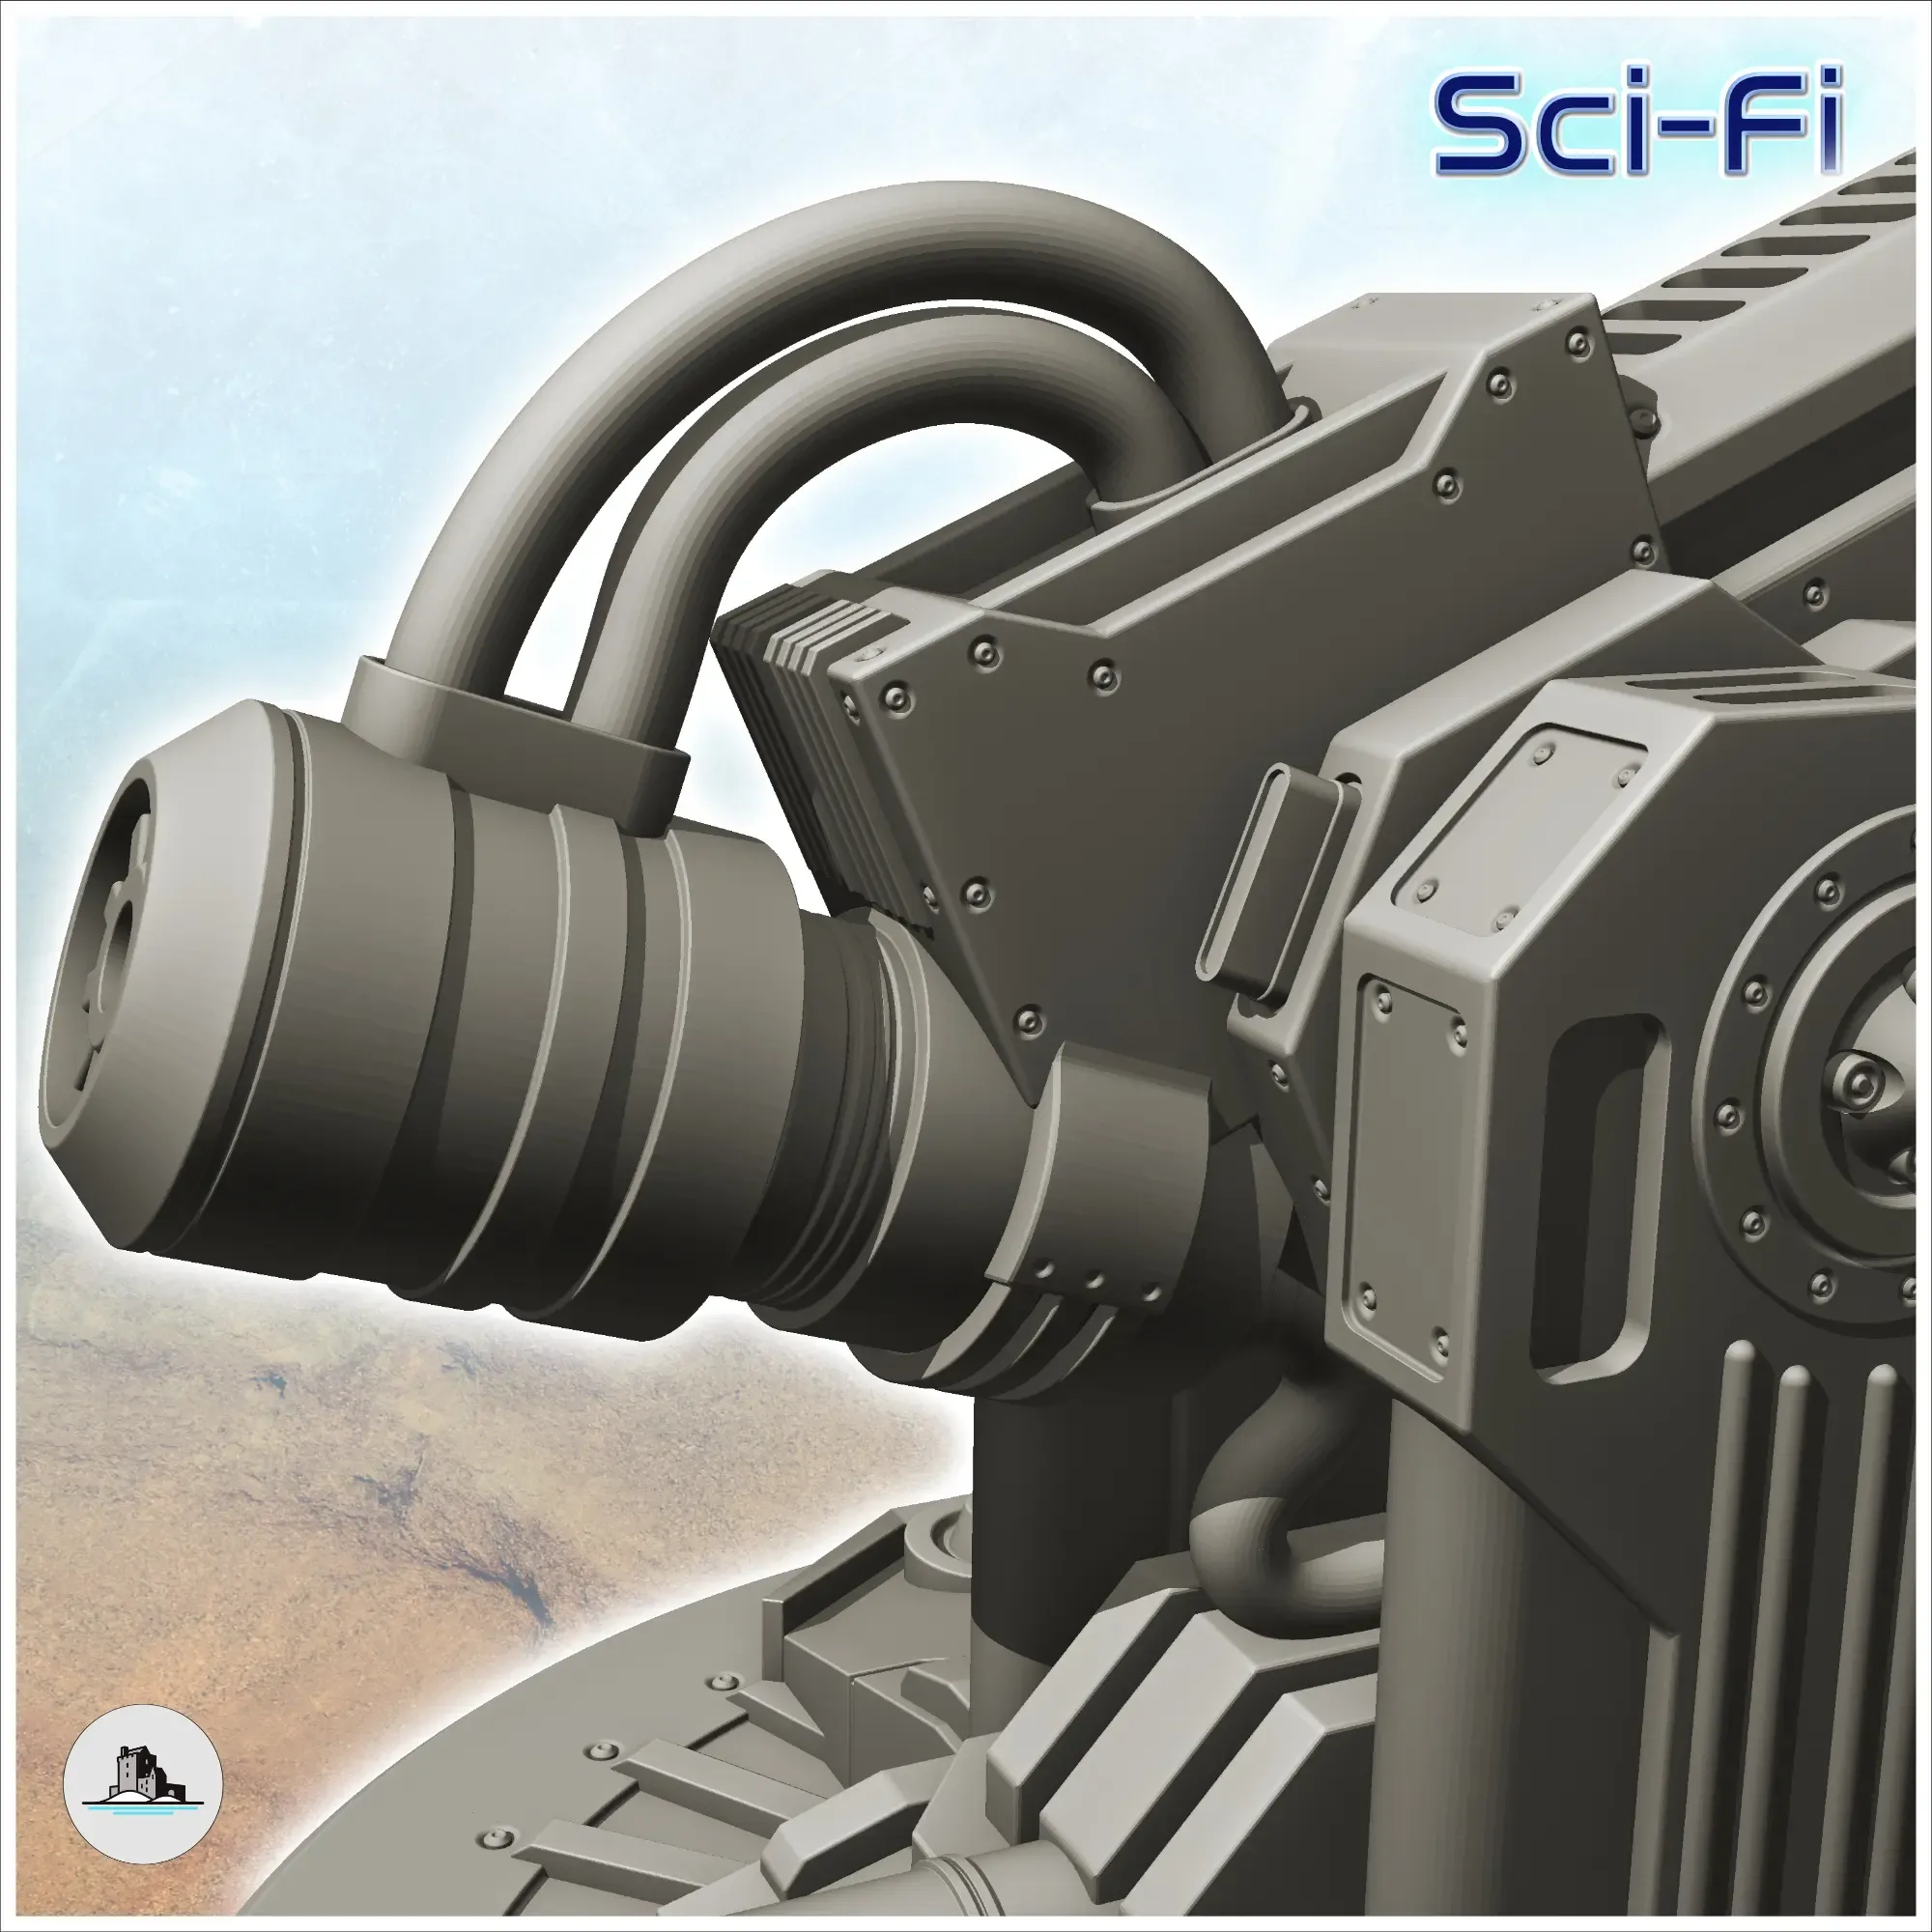 Crystal energy cannon - Terrain Scifi Science fiction SF